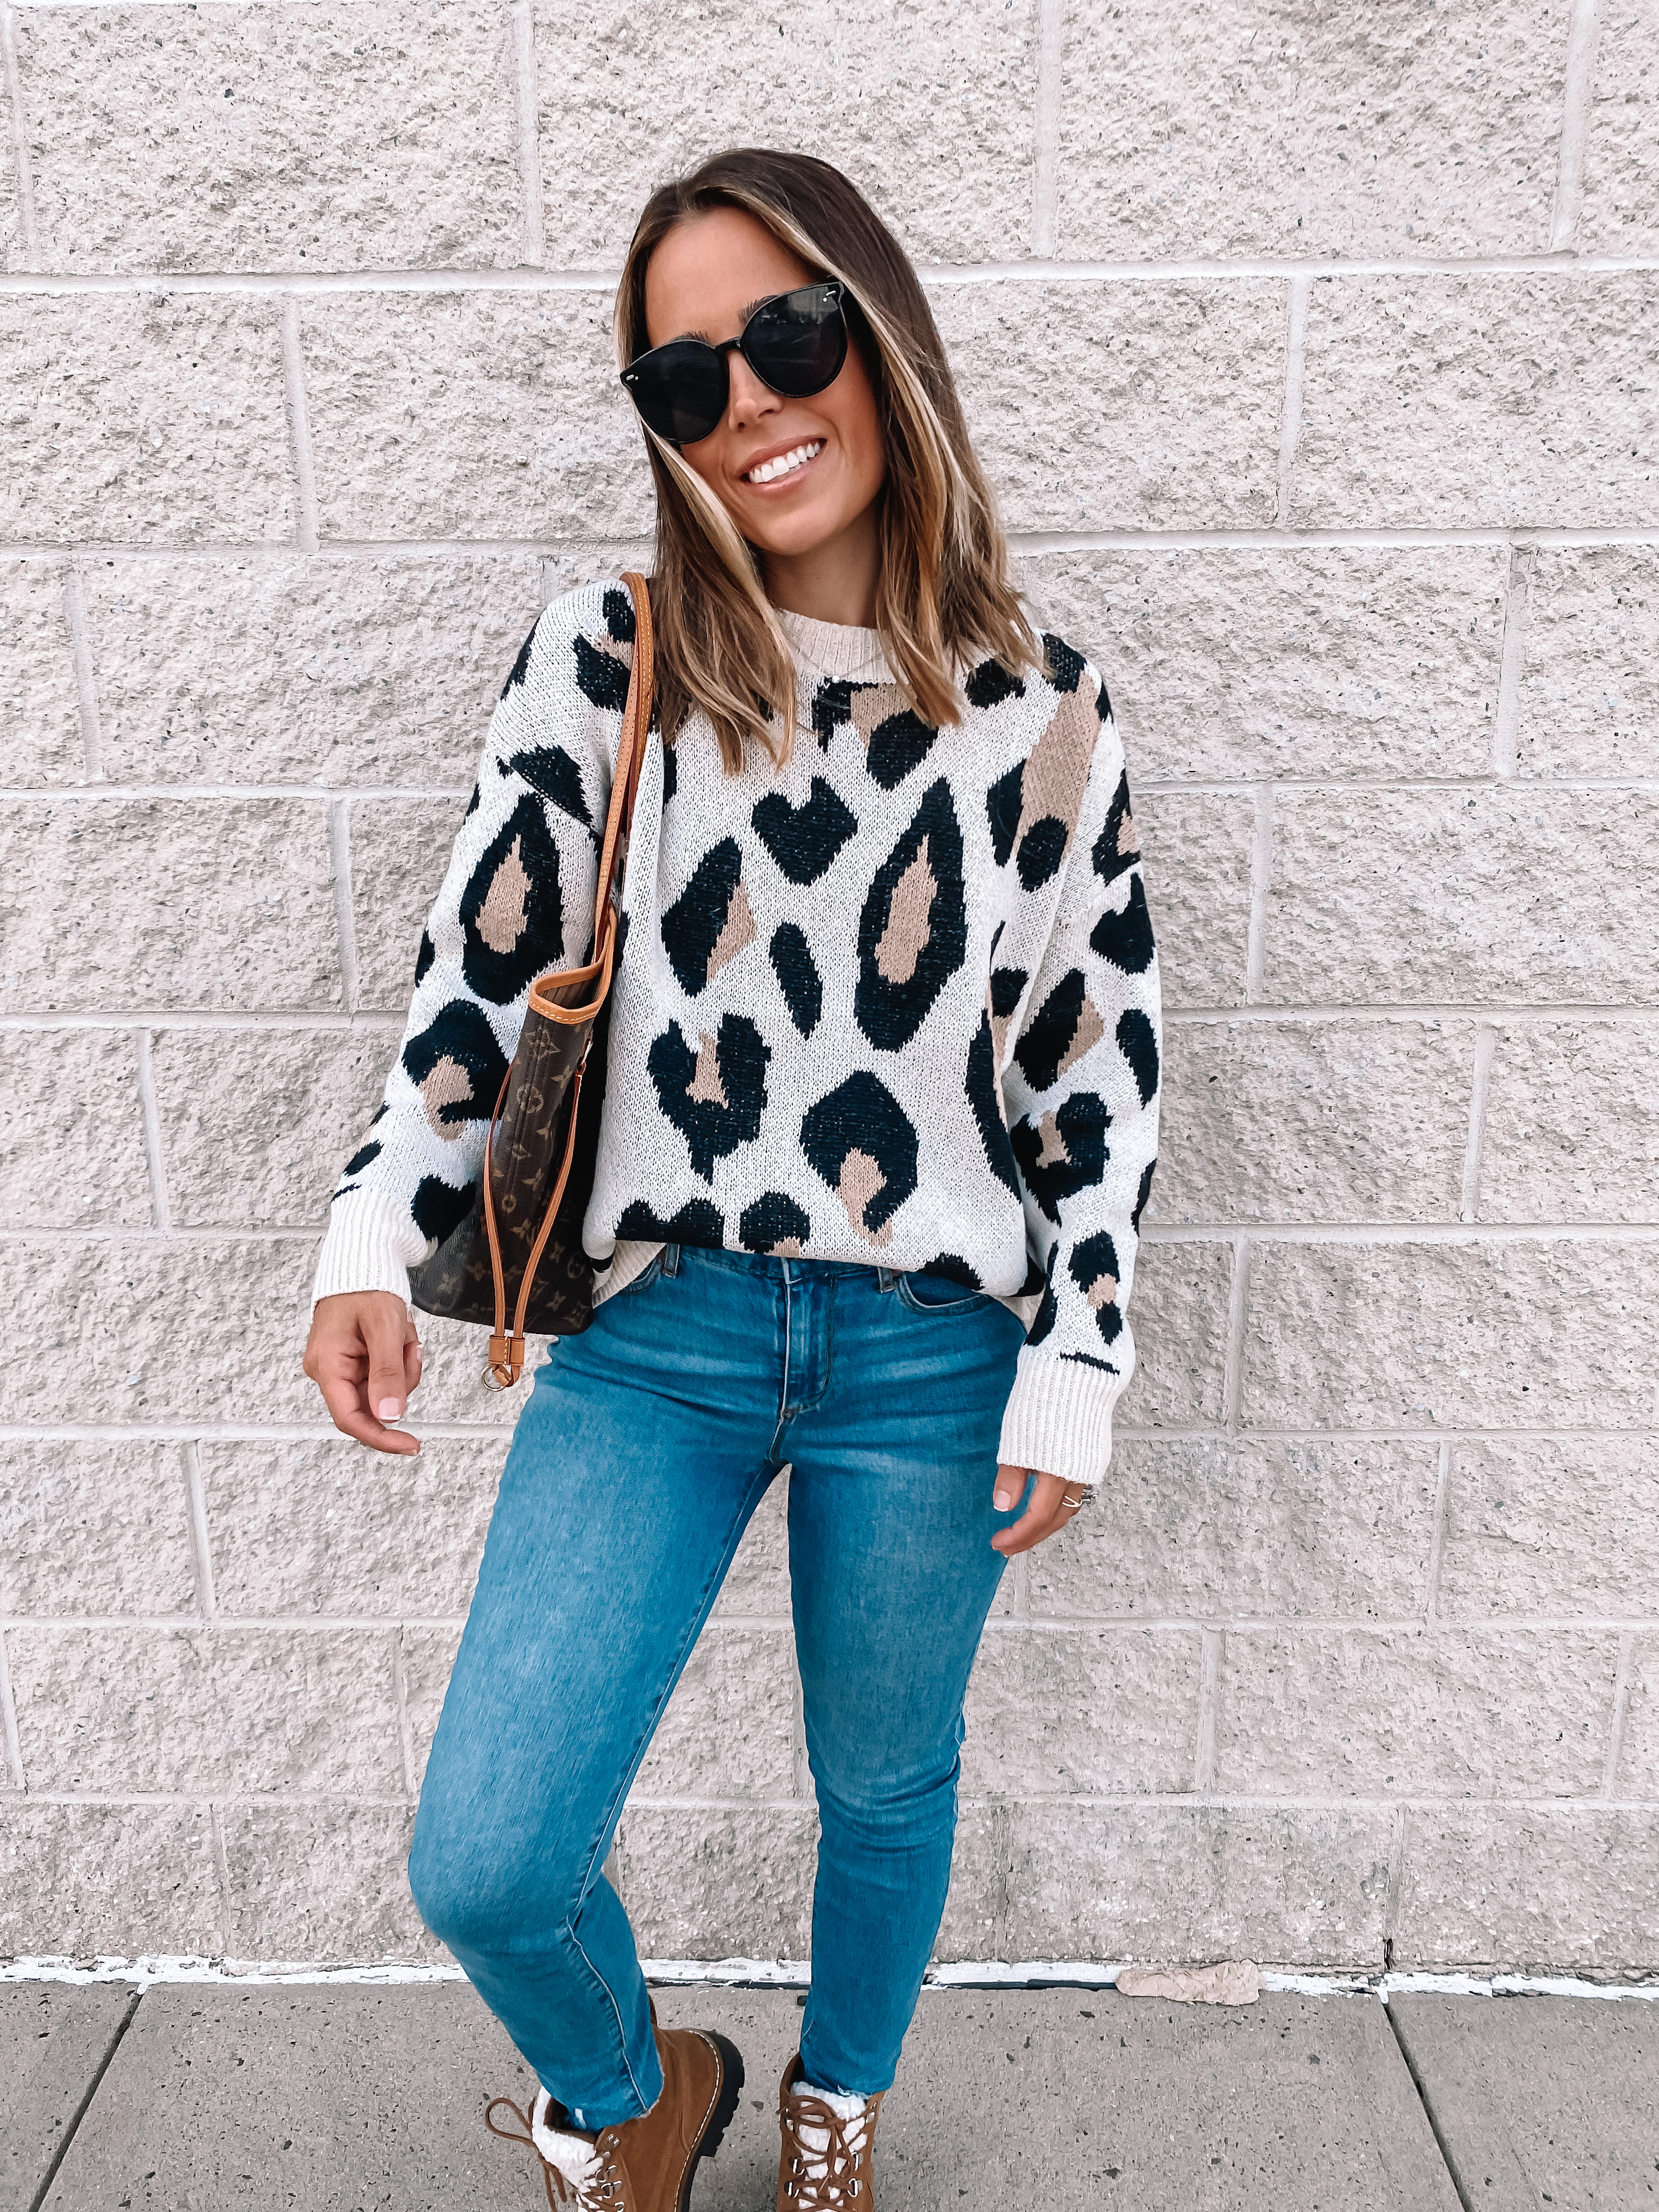 $19 Leopard Sweater from Walmart | MrsCasual